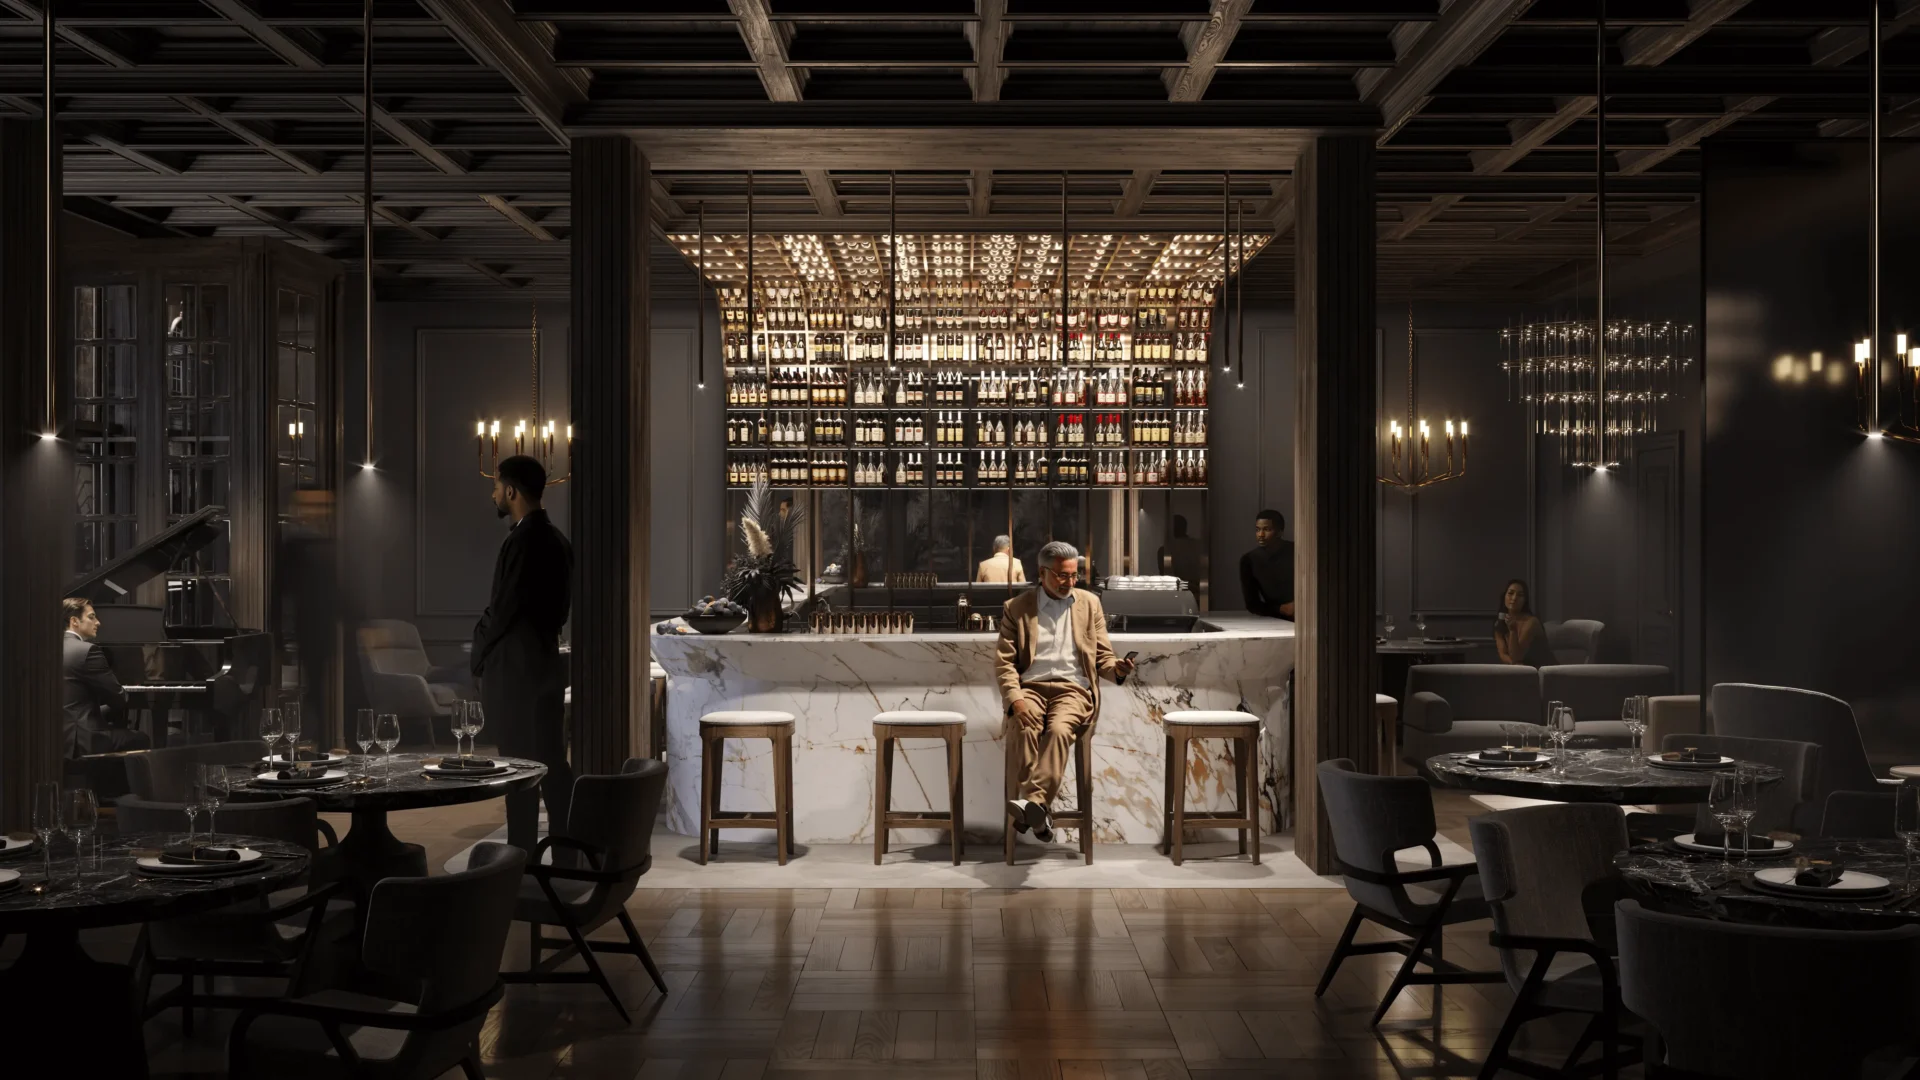 Photorealistic People: restaurant interior